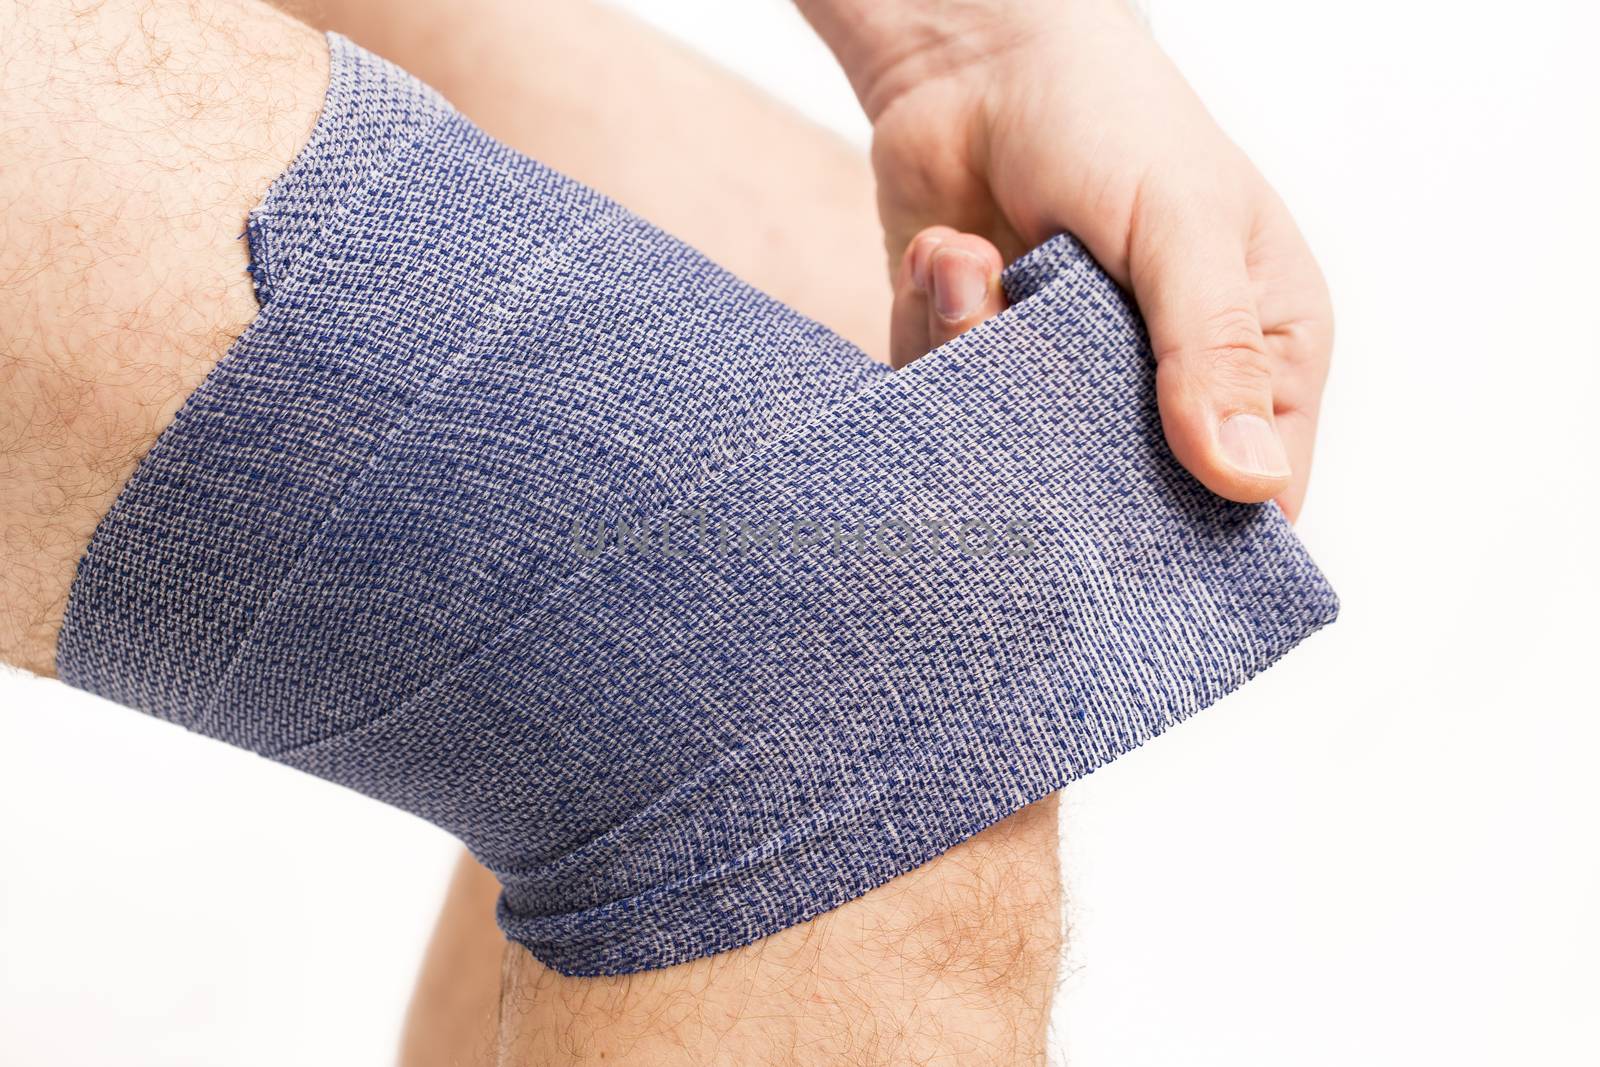 man putting  elastic bandage on knee pain health France